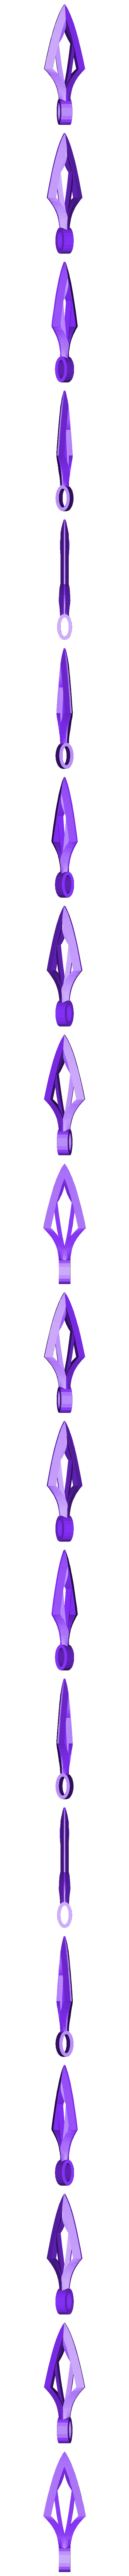 Double Arrowhead.stl Download free STL file Double Arrowhead Jewel • Model to 3D print, wahlentom